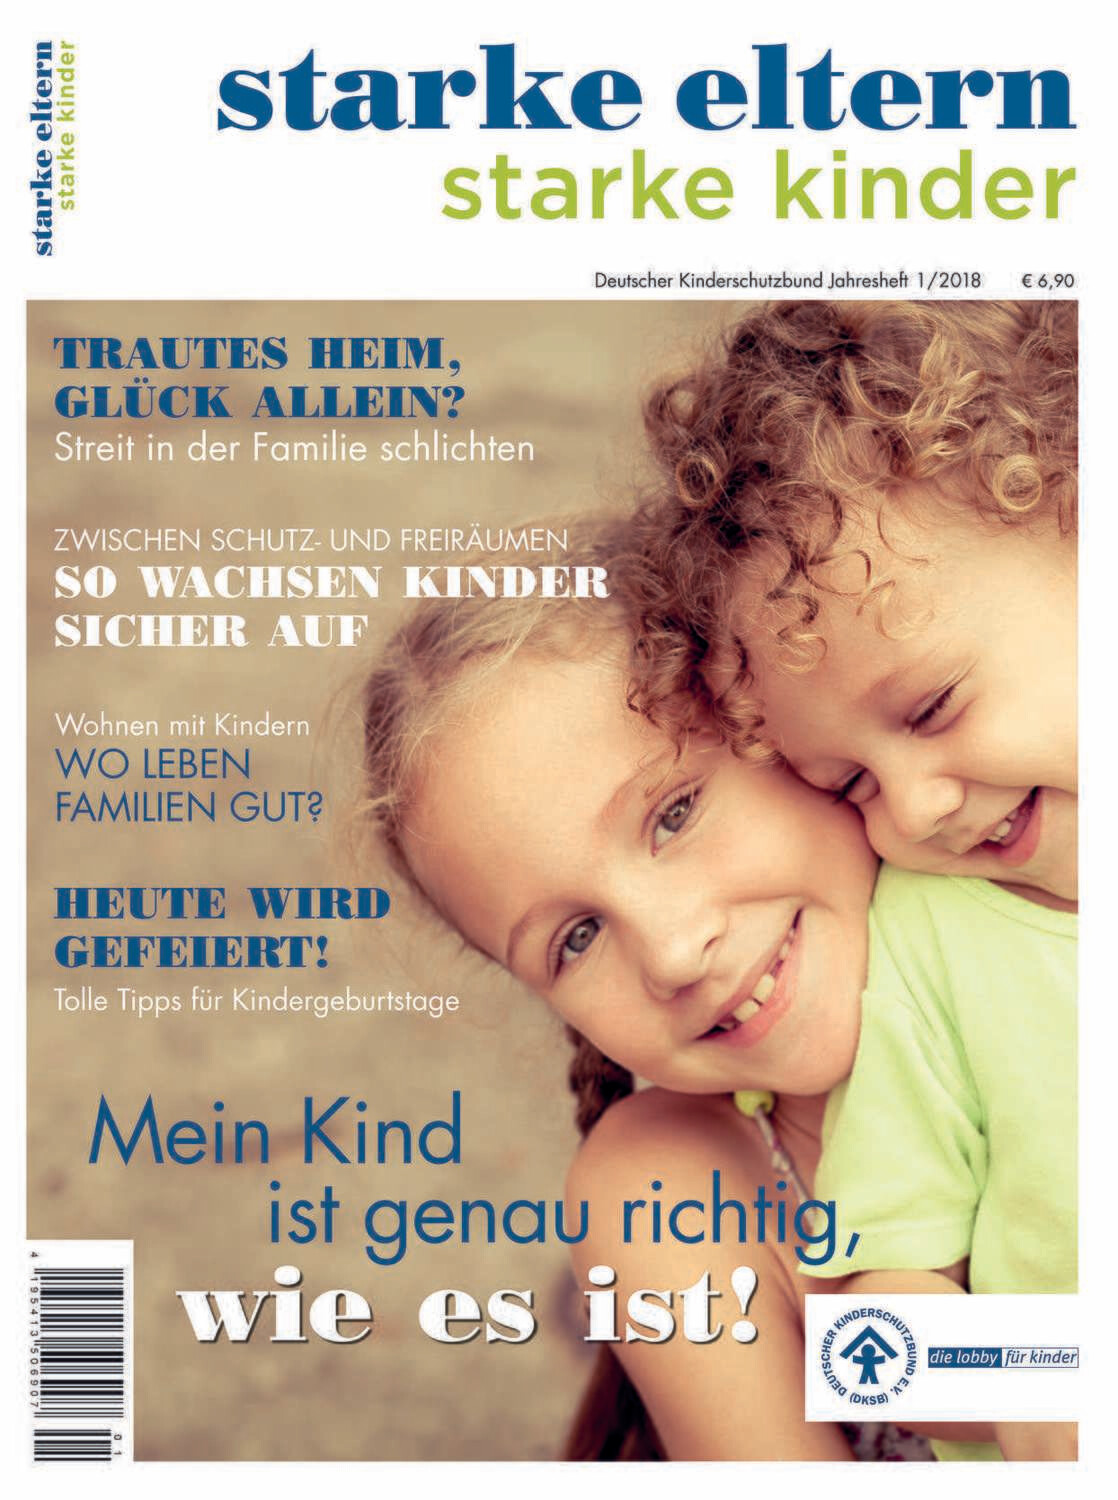 starke eltern - starke kinder 2018 (e-paper)